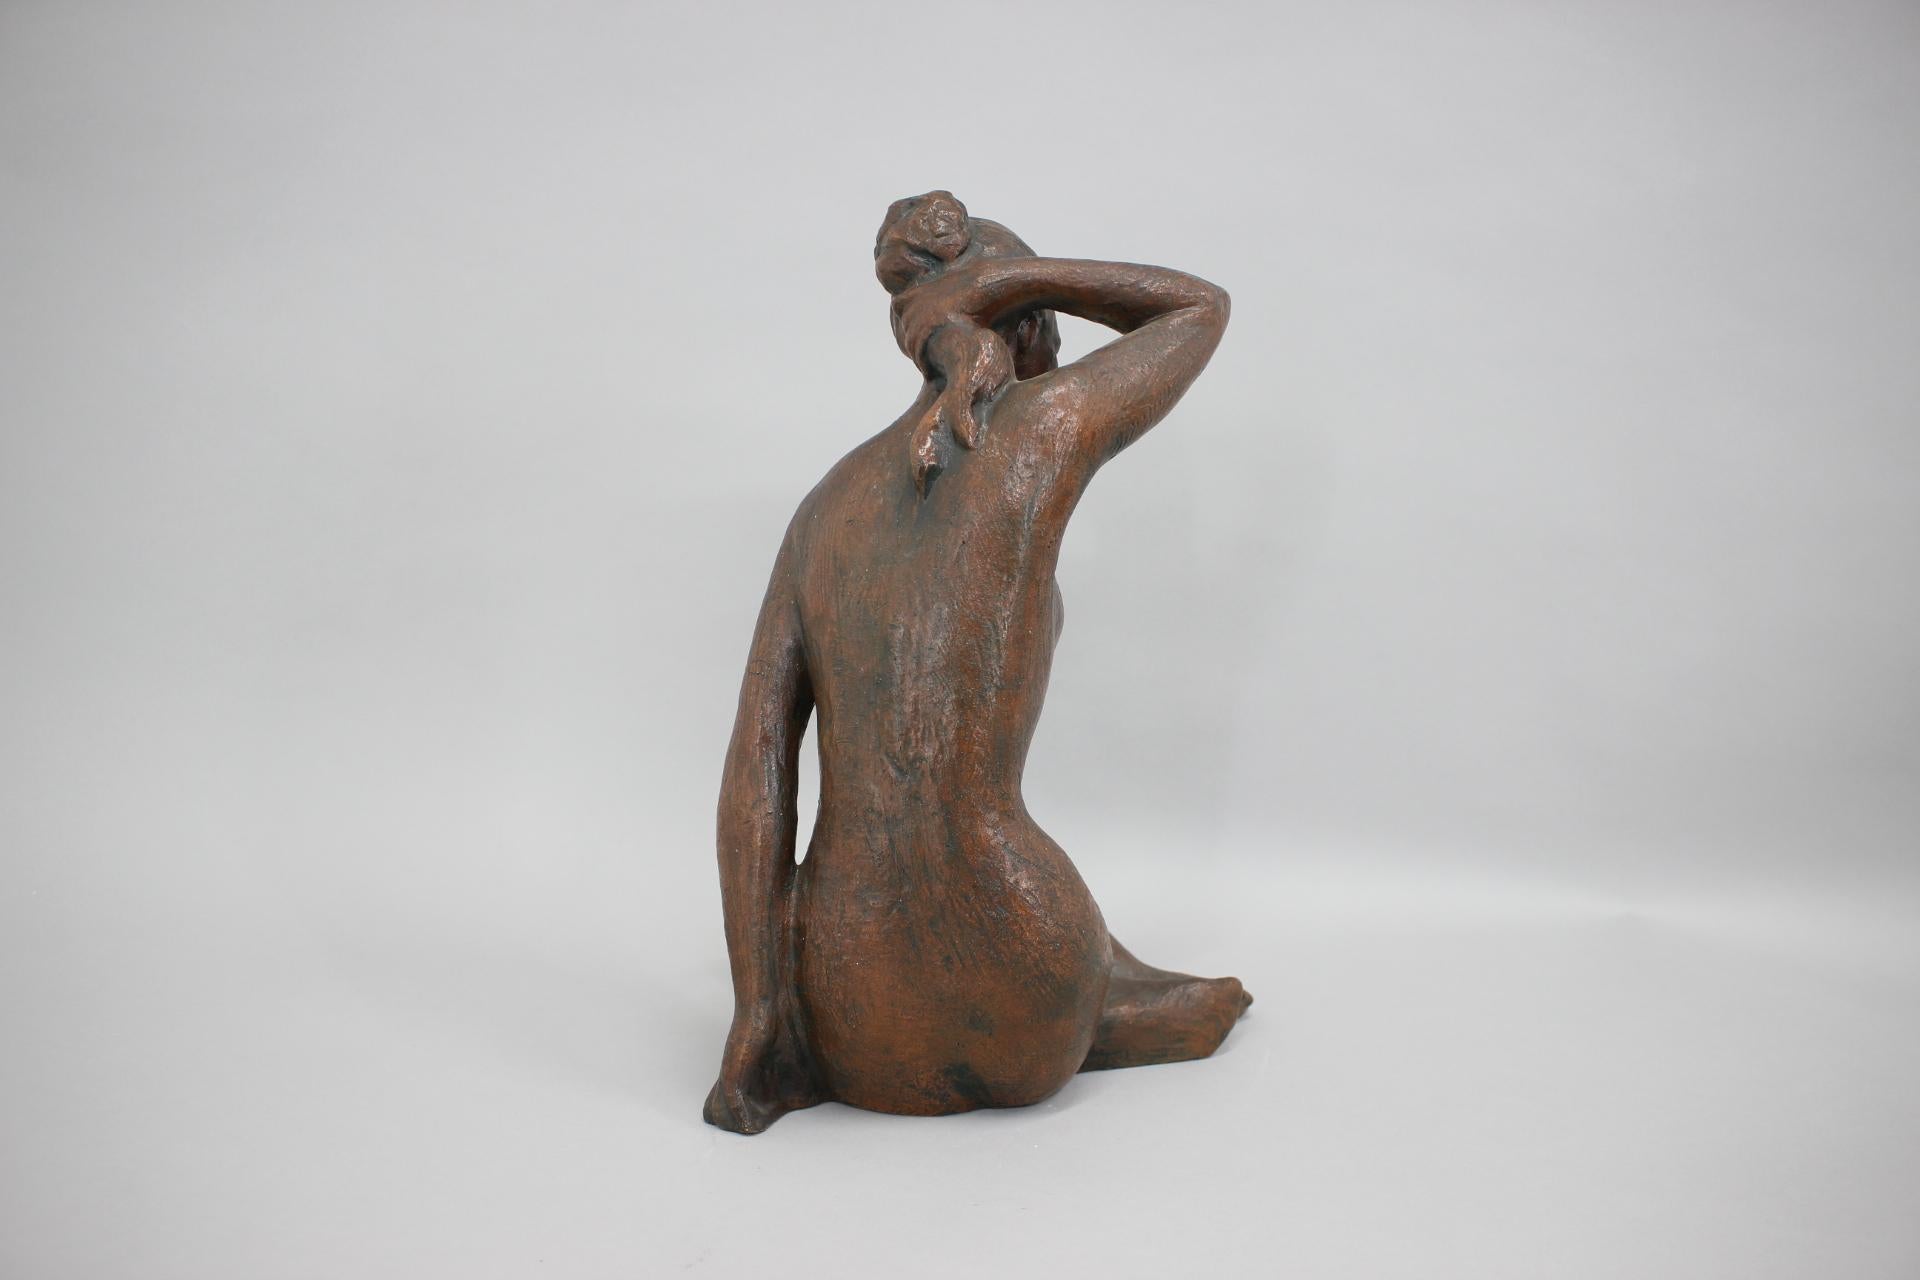 Czech Mid-Century Sculpture of Nude Sitting Women Designed by Jitka Forejtová, 1960s